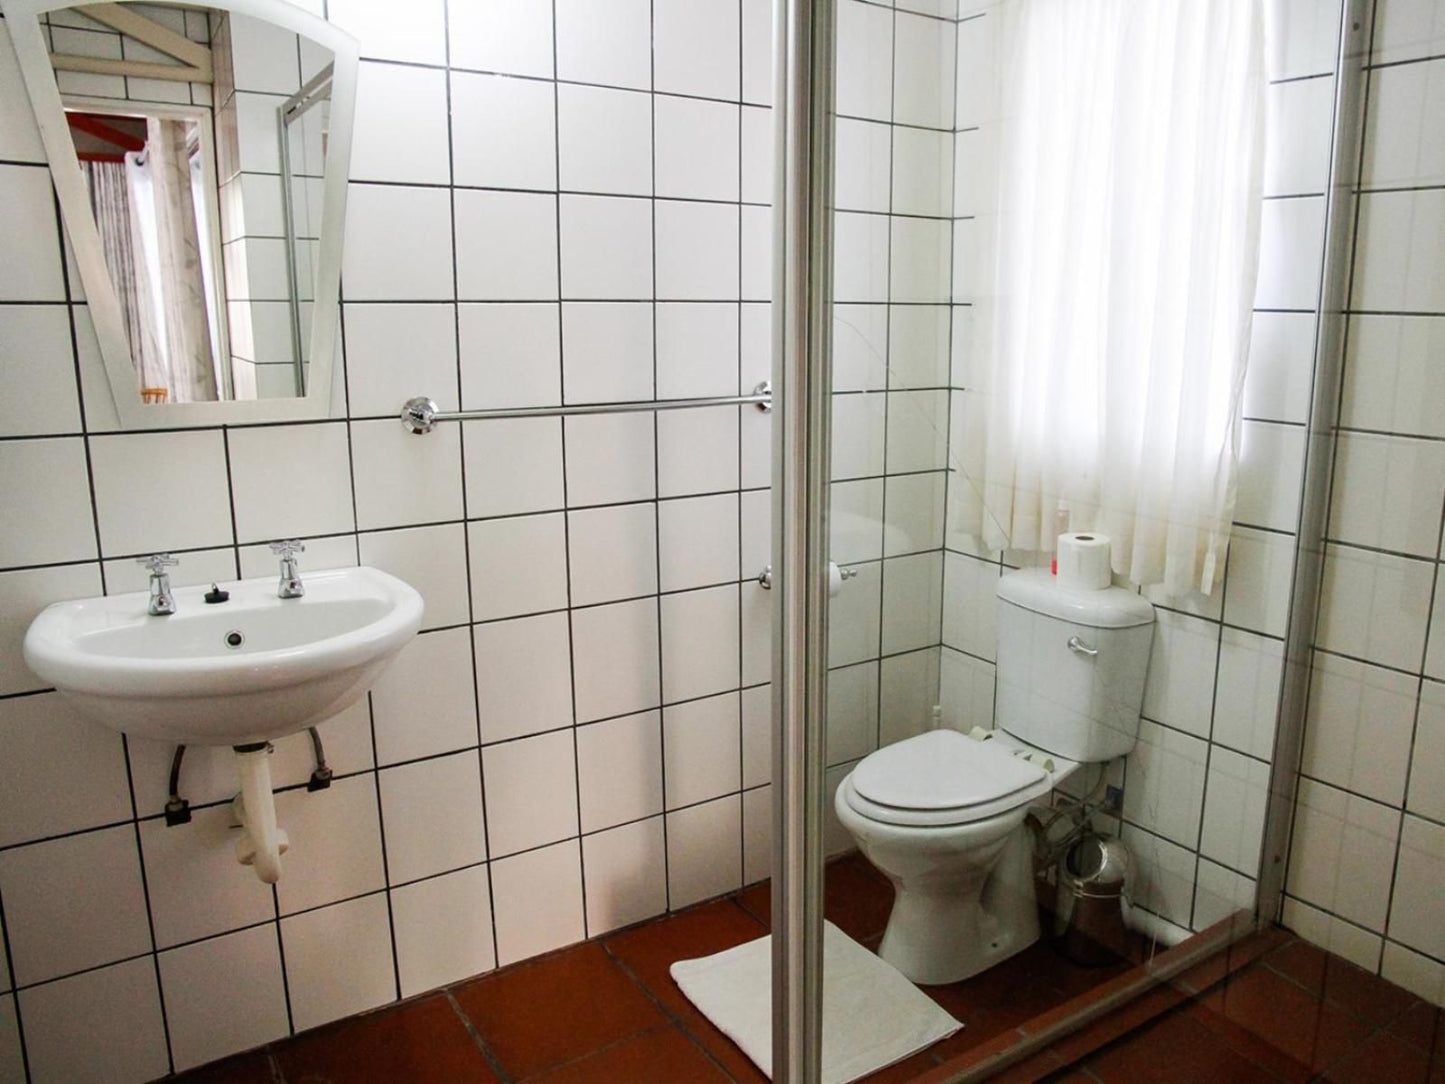 Ikaia River Lodge Keimoes Northern Cape South Africa Bathroom